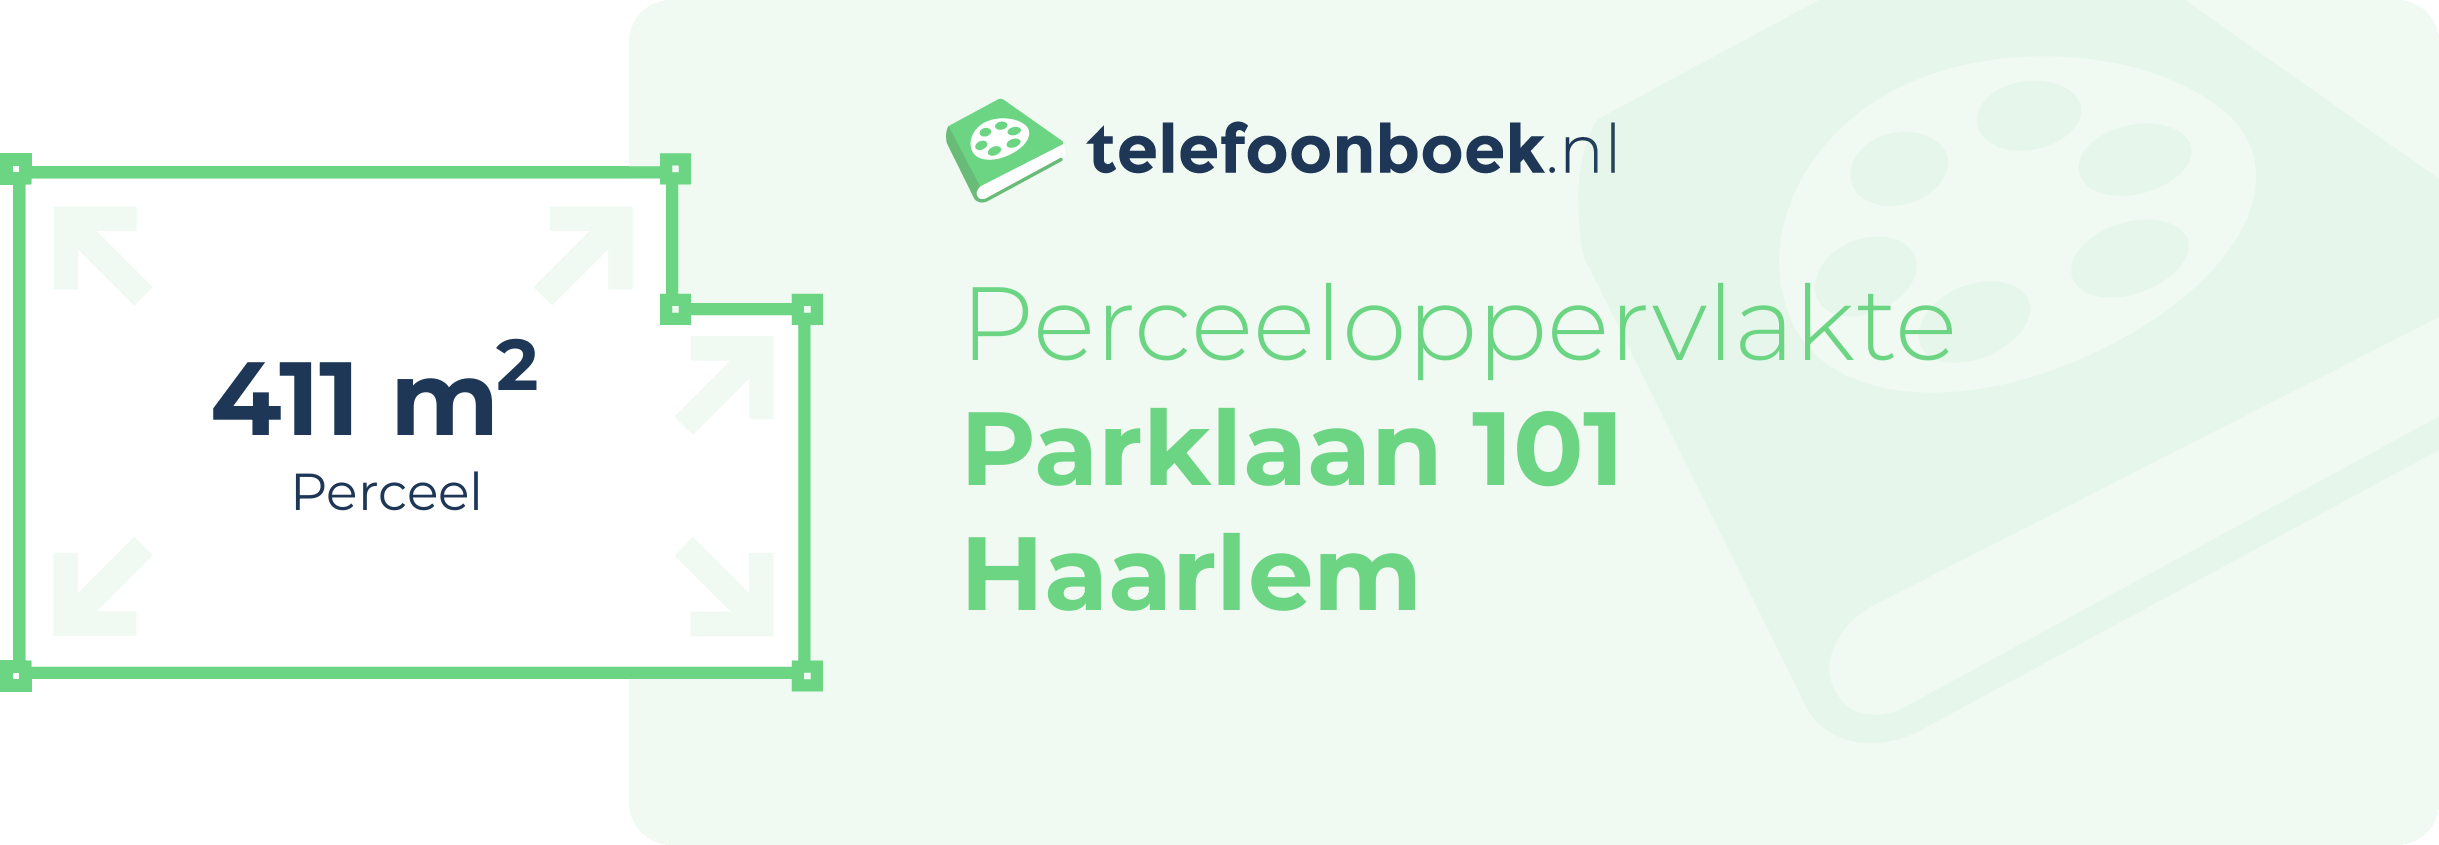 Perceeloppervlakte Parklaan 101 Haarlem